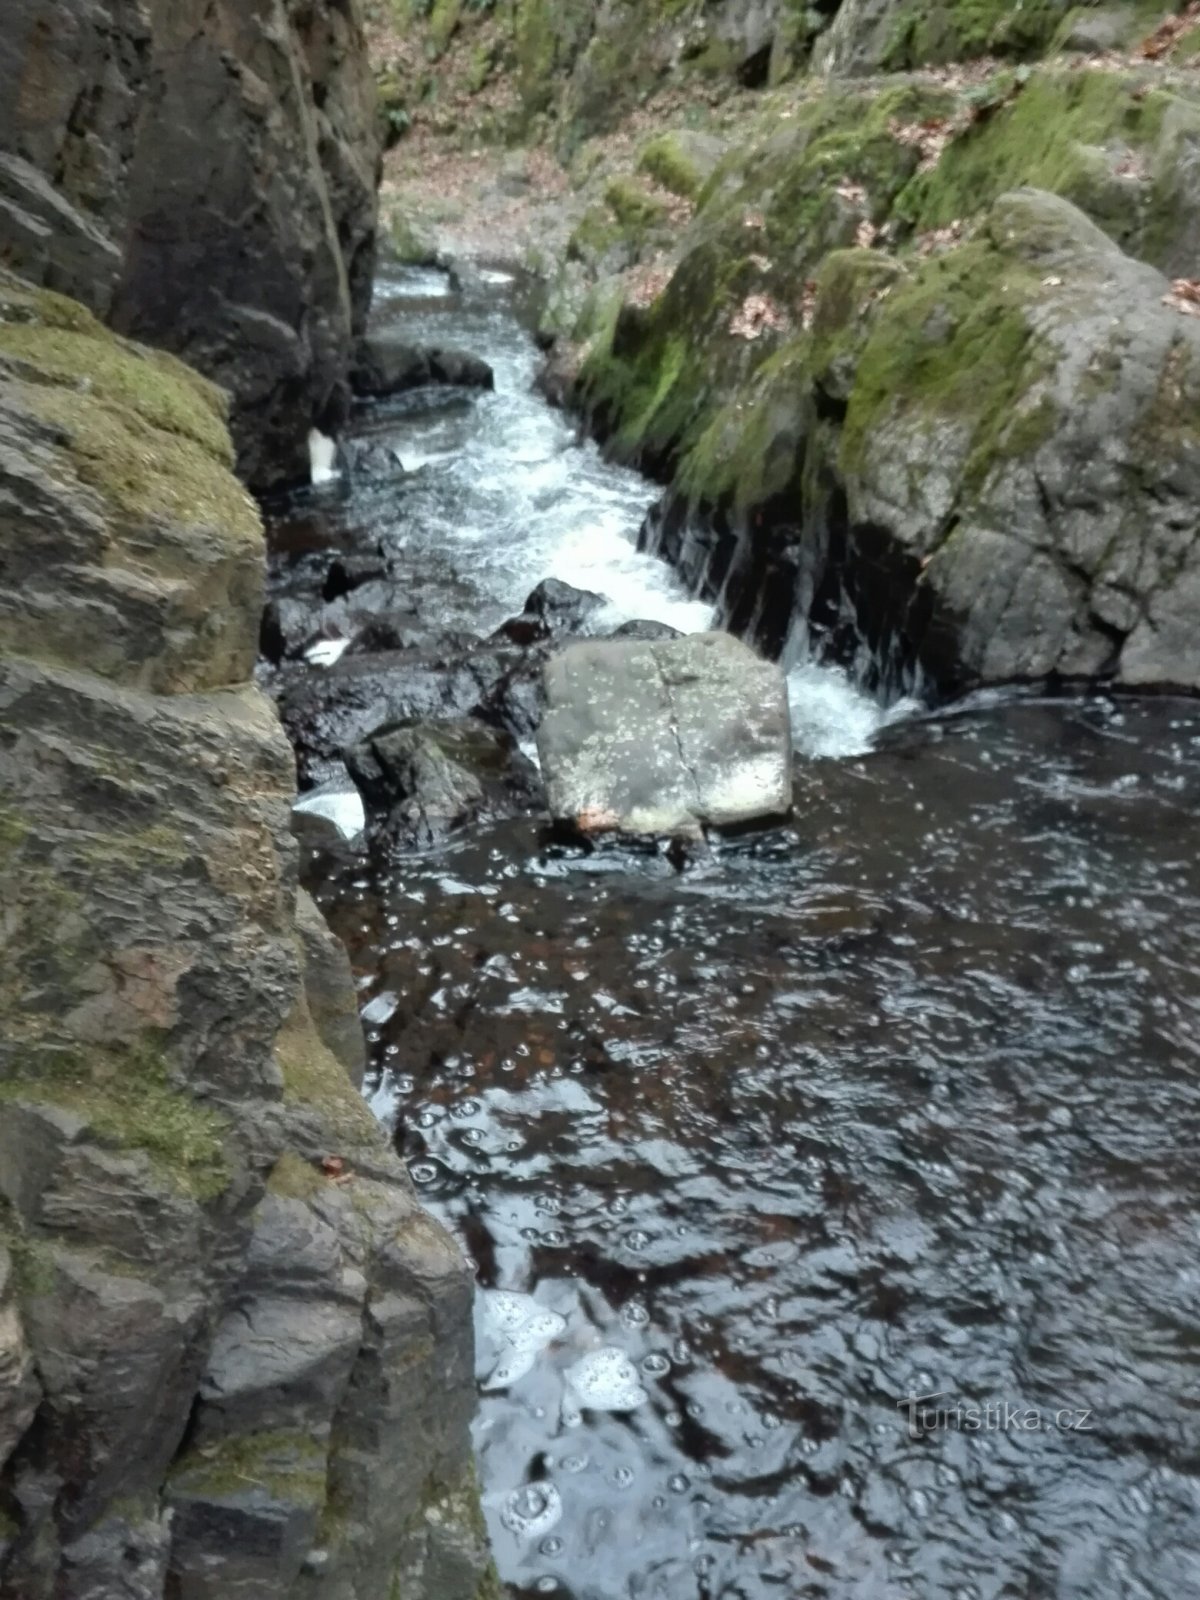 From Skryjí to Skryjí through waterfalls, beautiful rocks and Celtic treasure